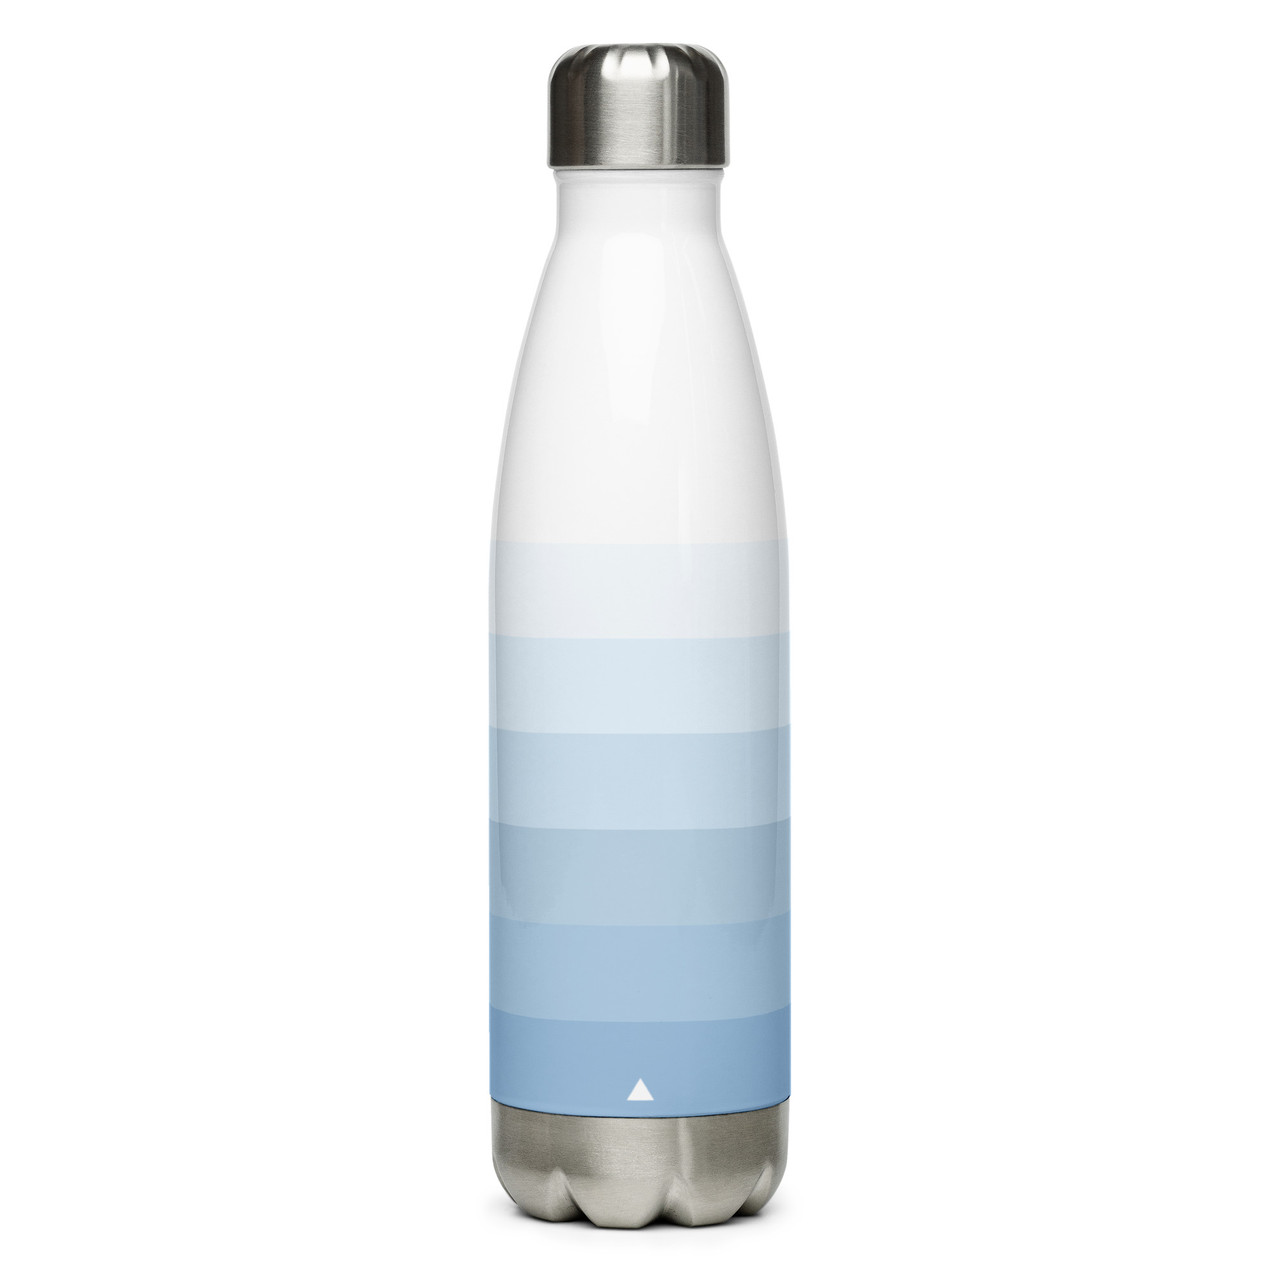 https://cdn11.bigcommerce.com/s-sbrh1fq01p/images/stencil/1280x1280/products/127/226/stainless-steel-water-bottle-white-17oz-left-63a638ec09761__65267.1671837940.jpg?c=2